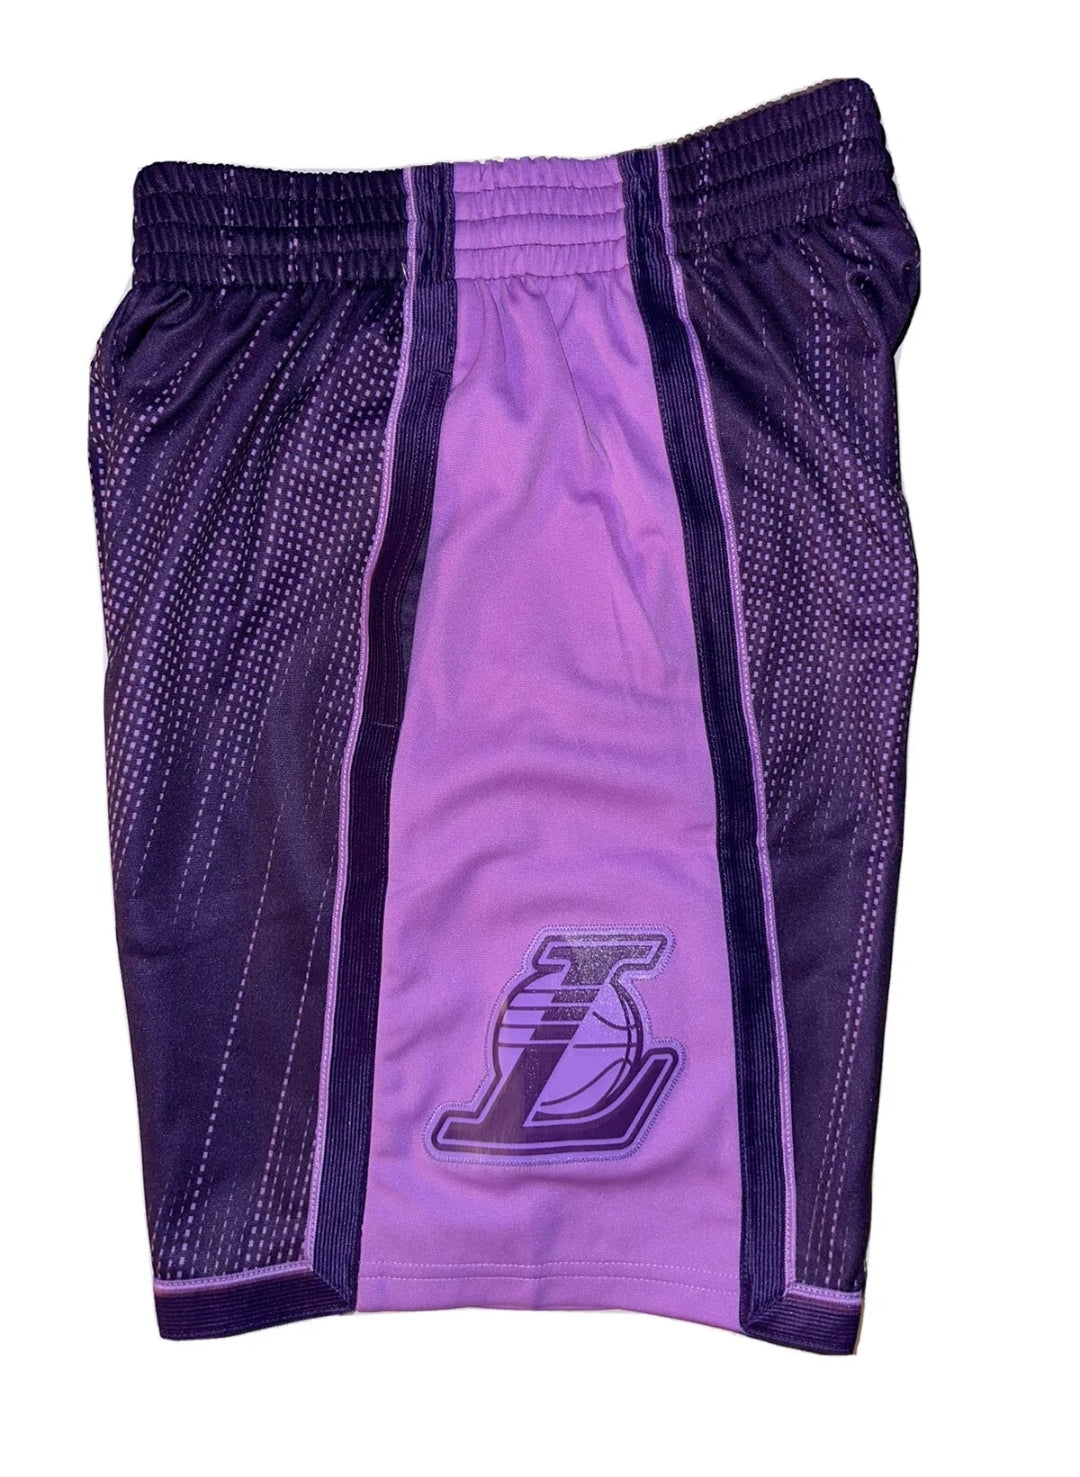 Mitchell & Ness Los Angeles Lakers Shorts Monochrome Purple